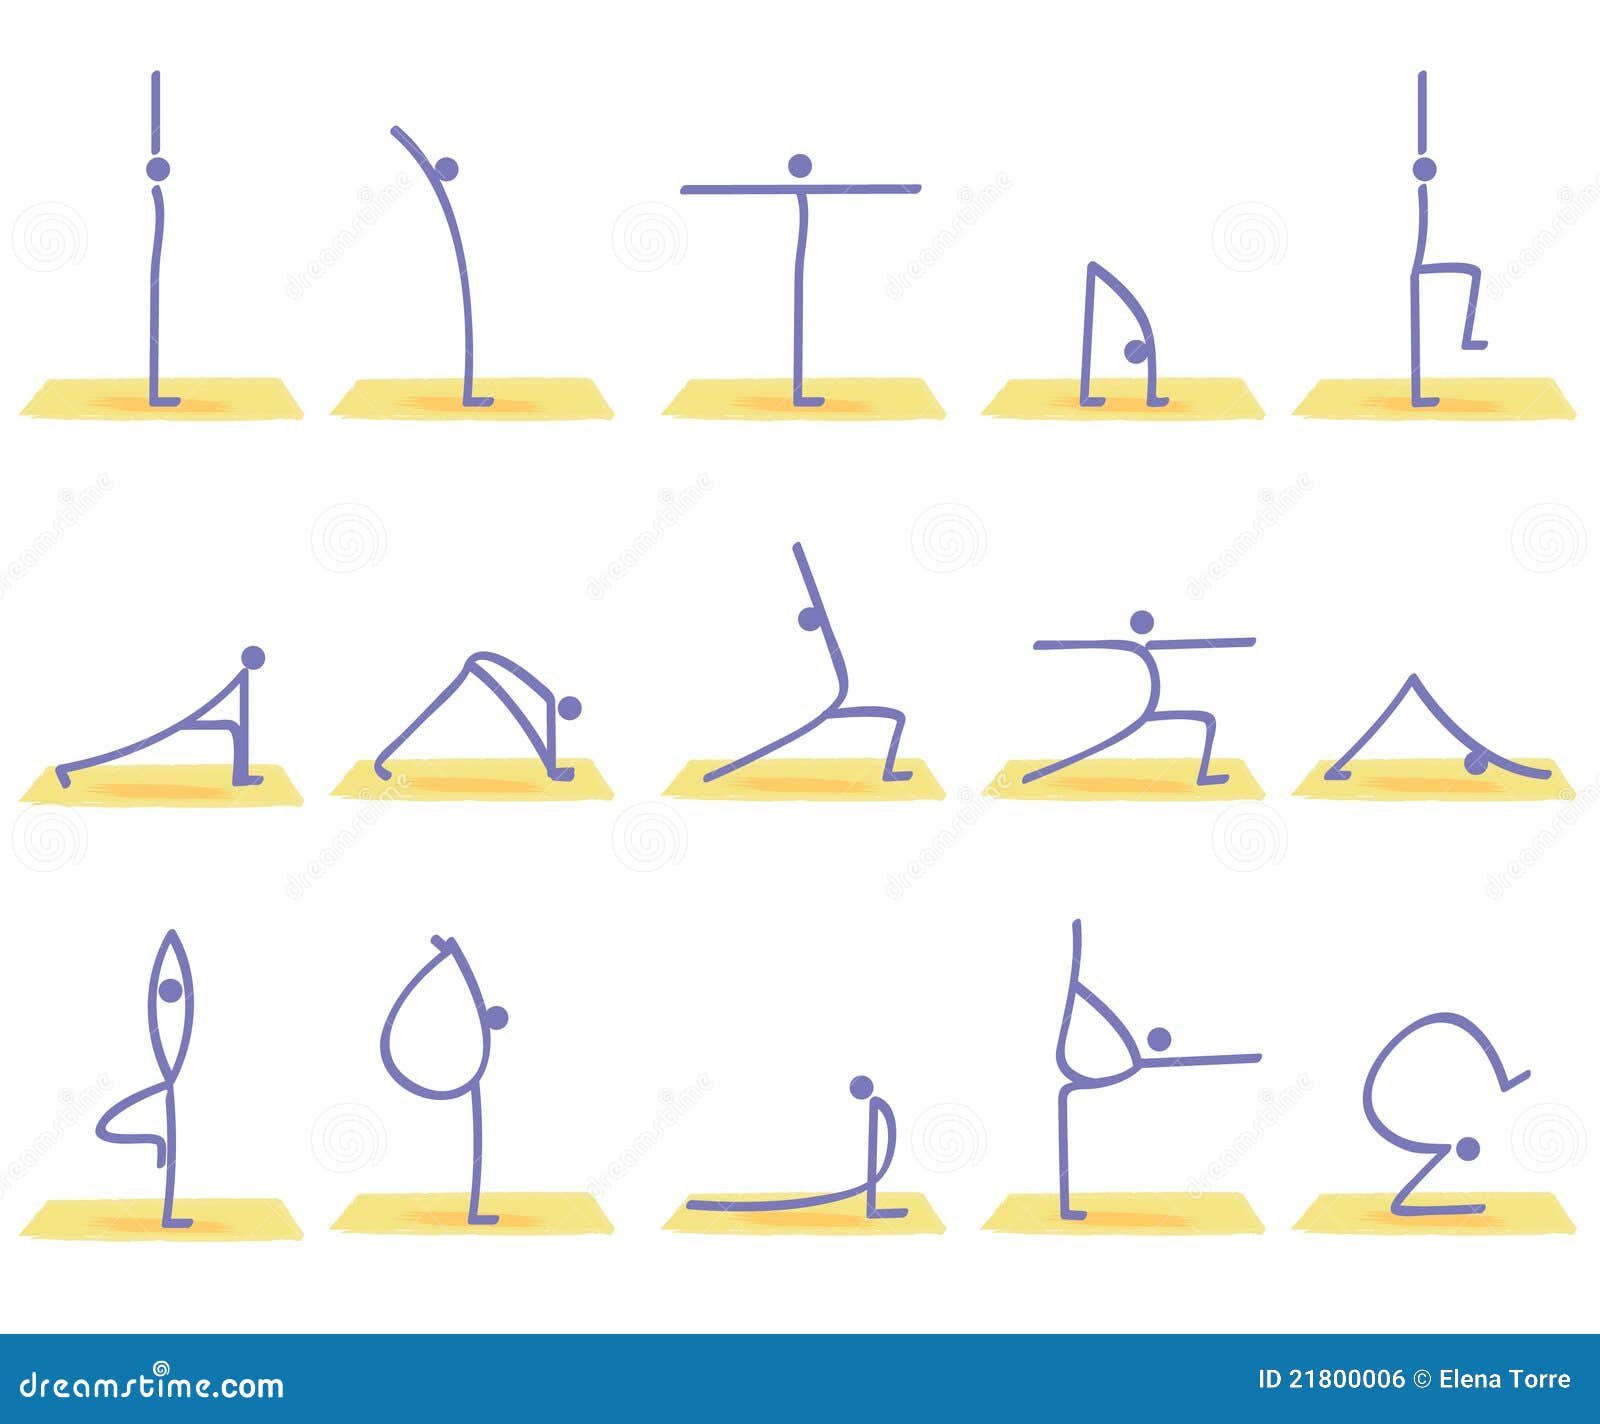 z Yoga poses a yoga  vector poses